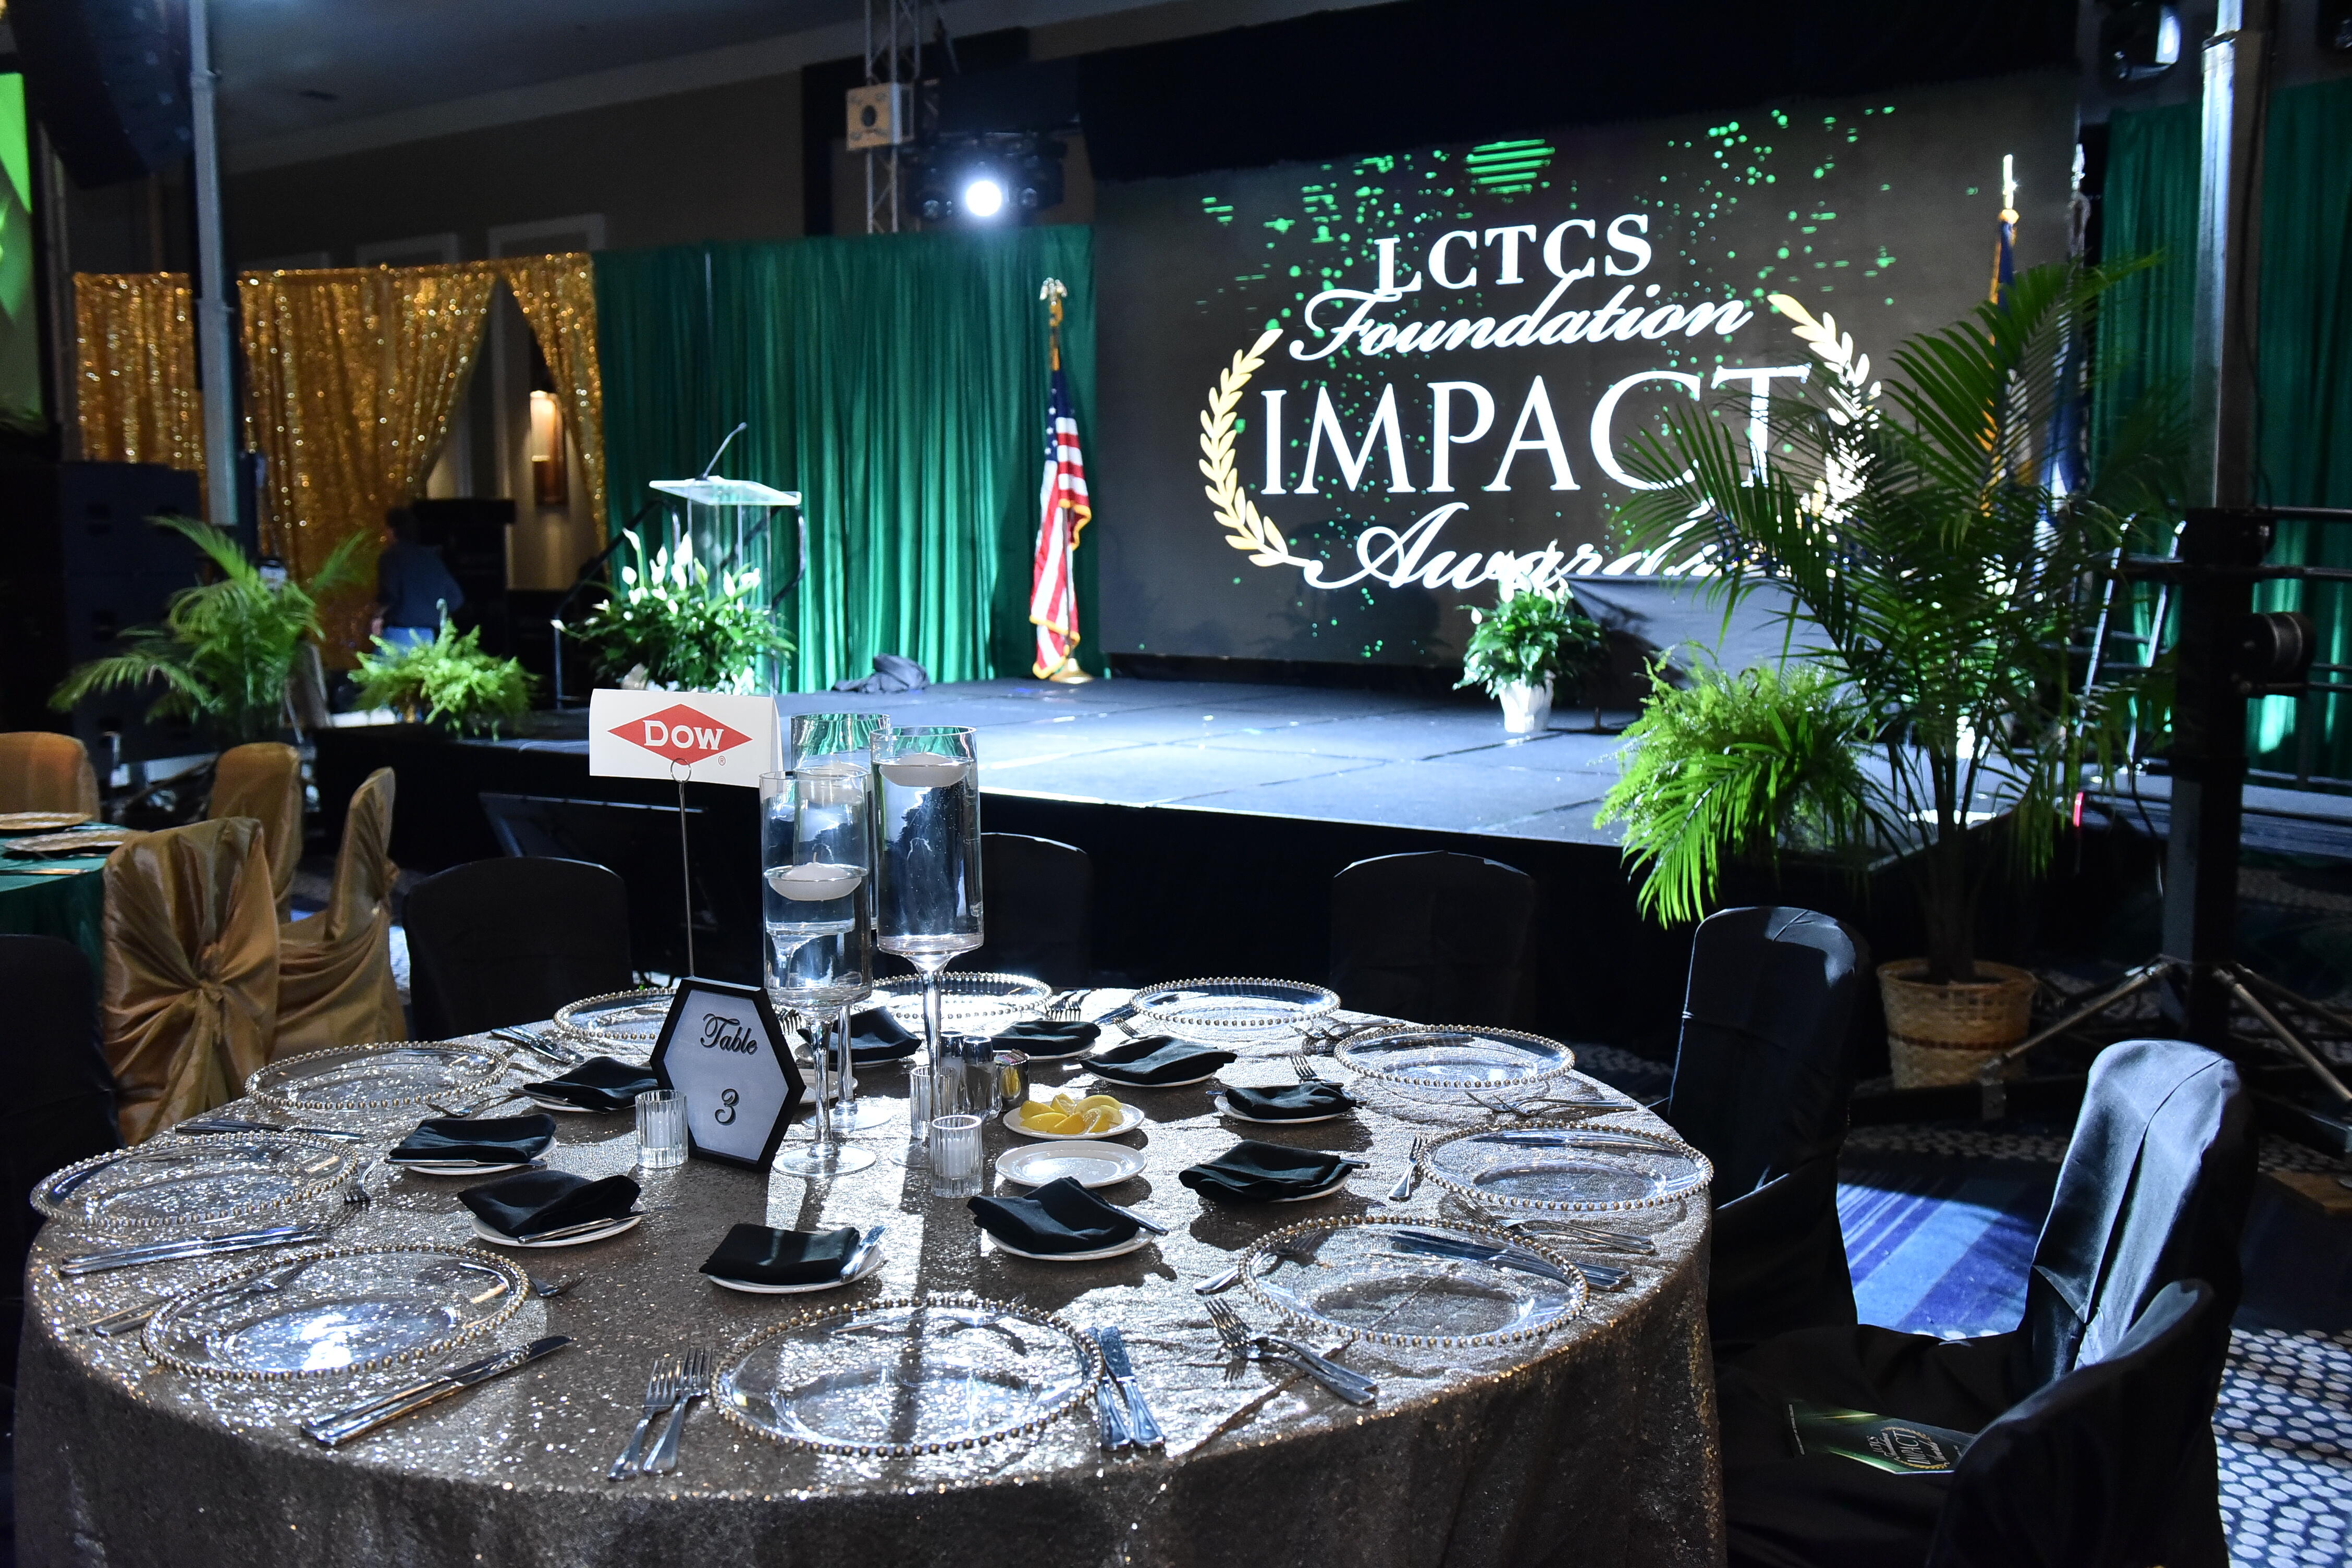 Setup for the 2022 LCTCS Foundation Impact Awards Gala